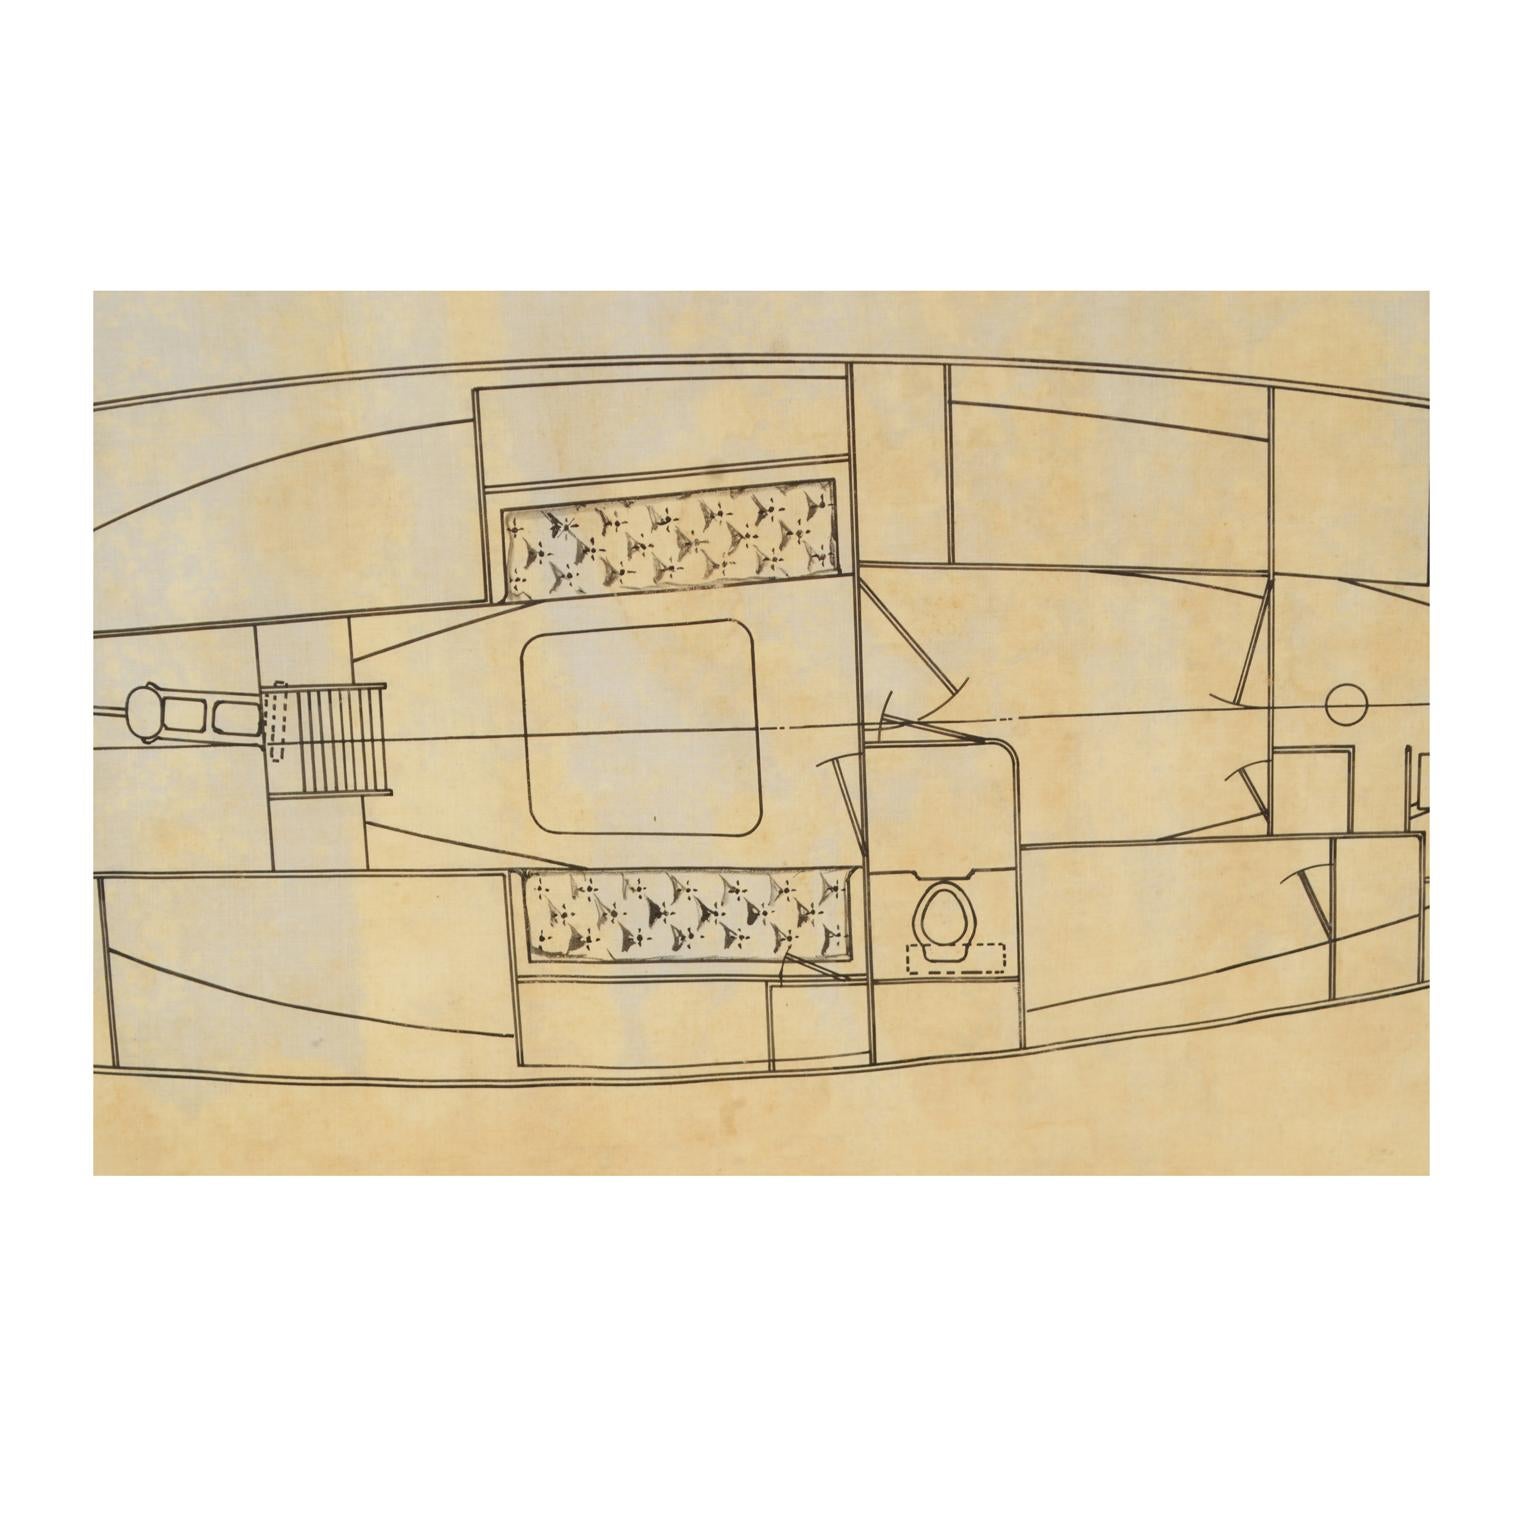 Projet du voilier Rosemary par William Fife III archives de Uffa Fox 4